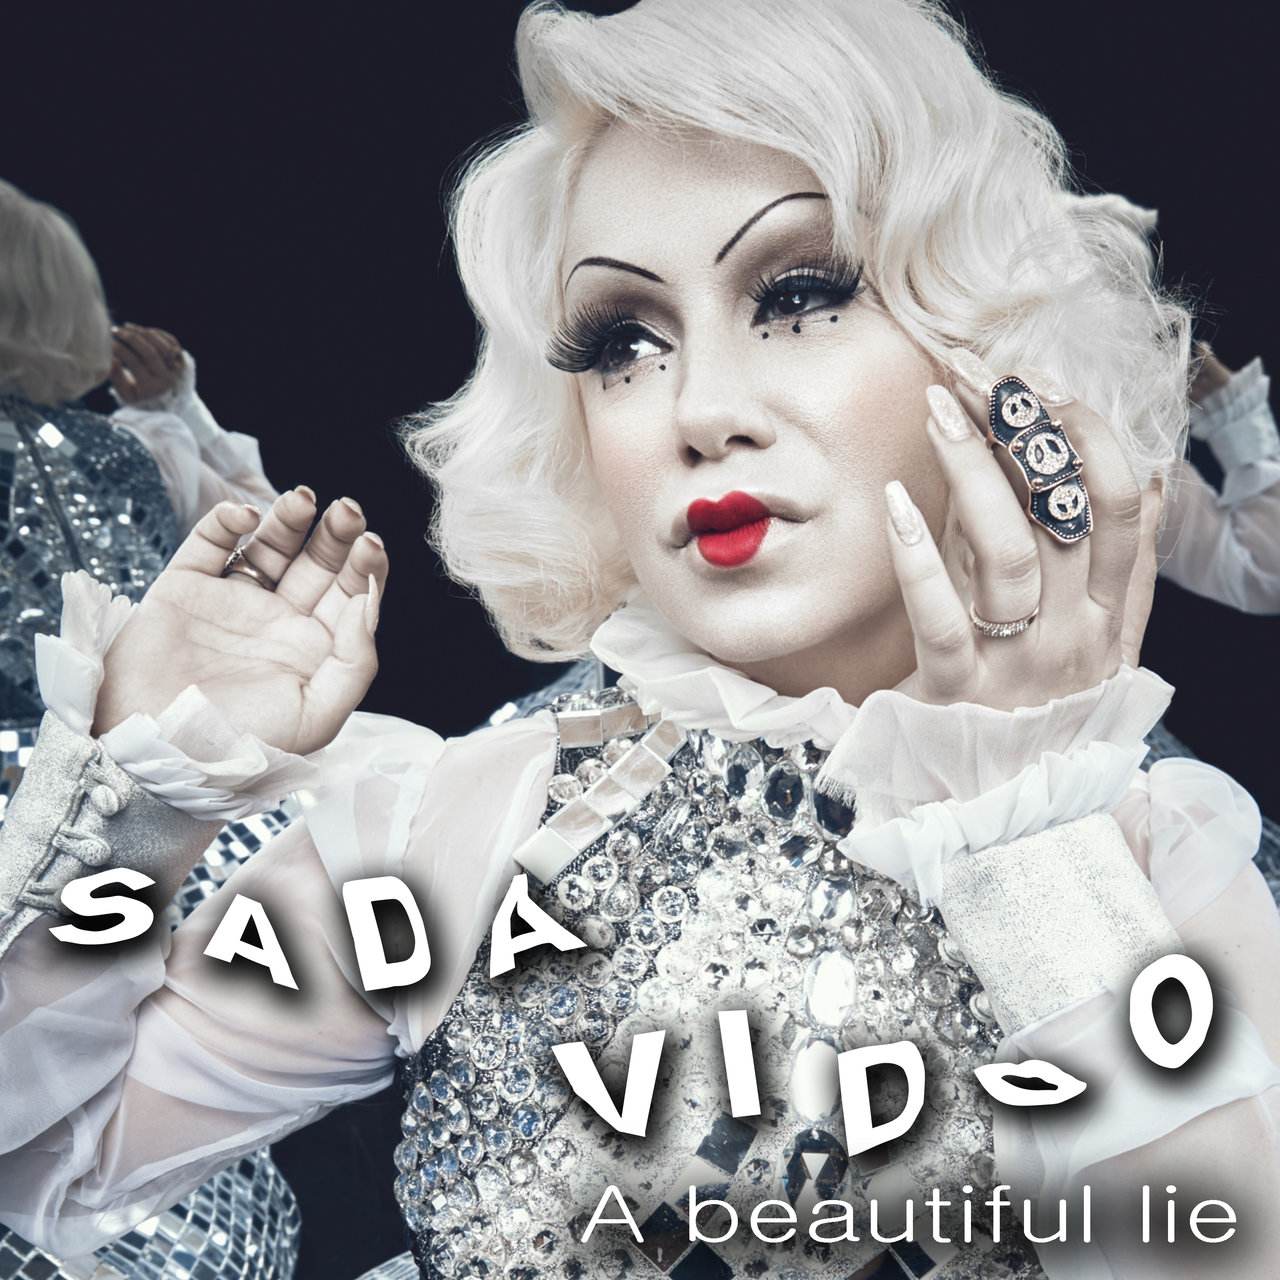 Sada Vidoo A Beautiful Lie cover artwork